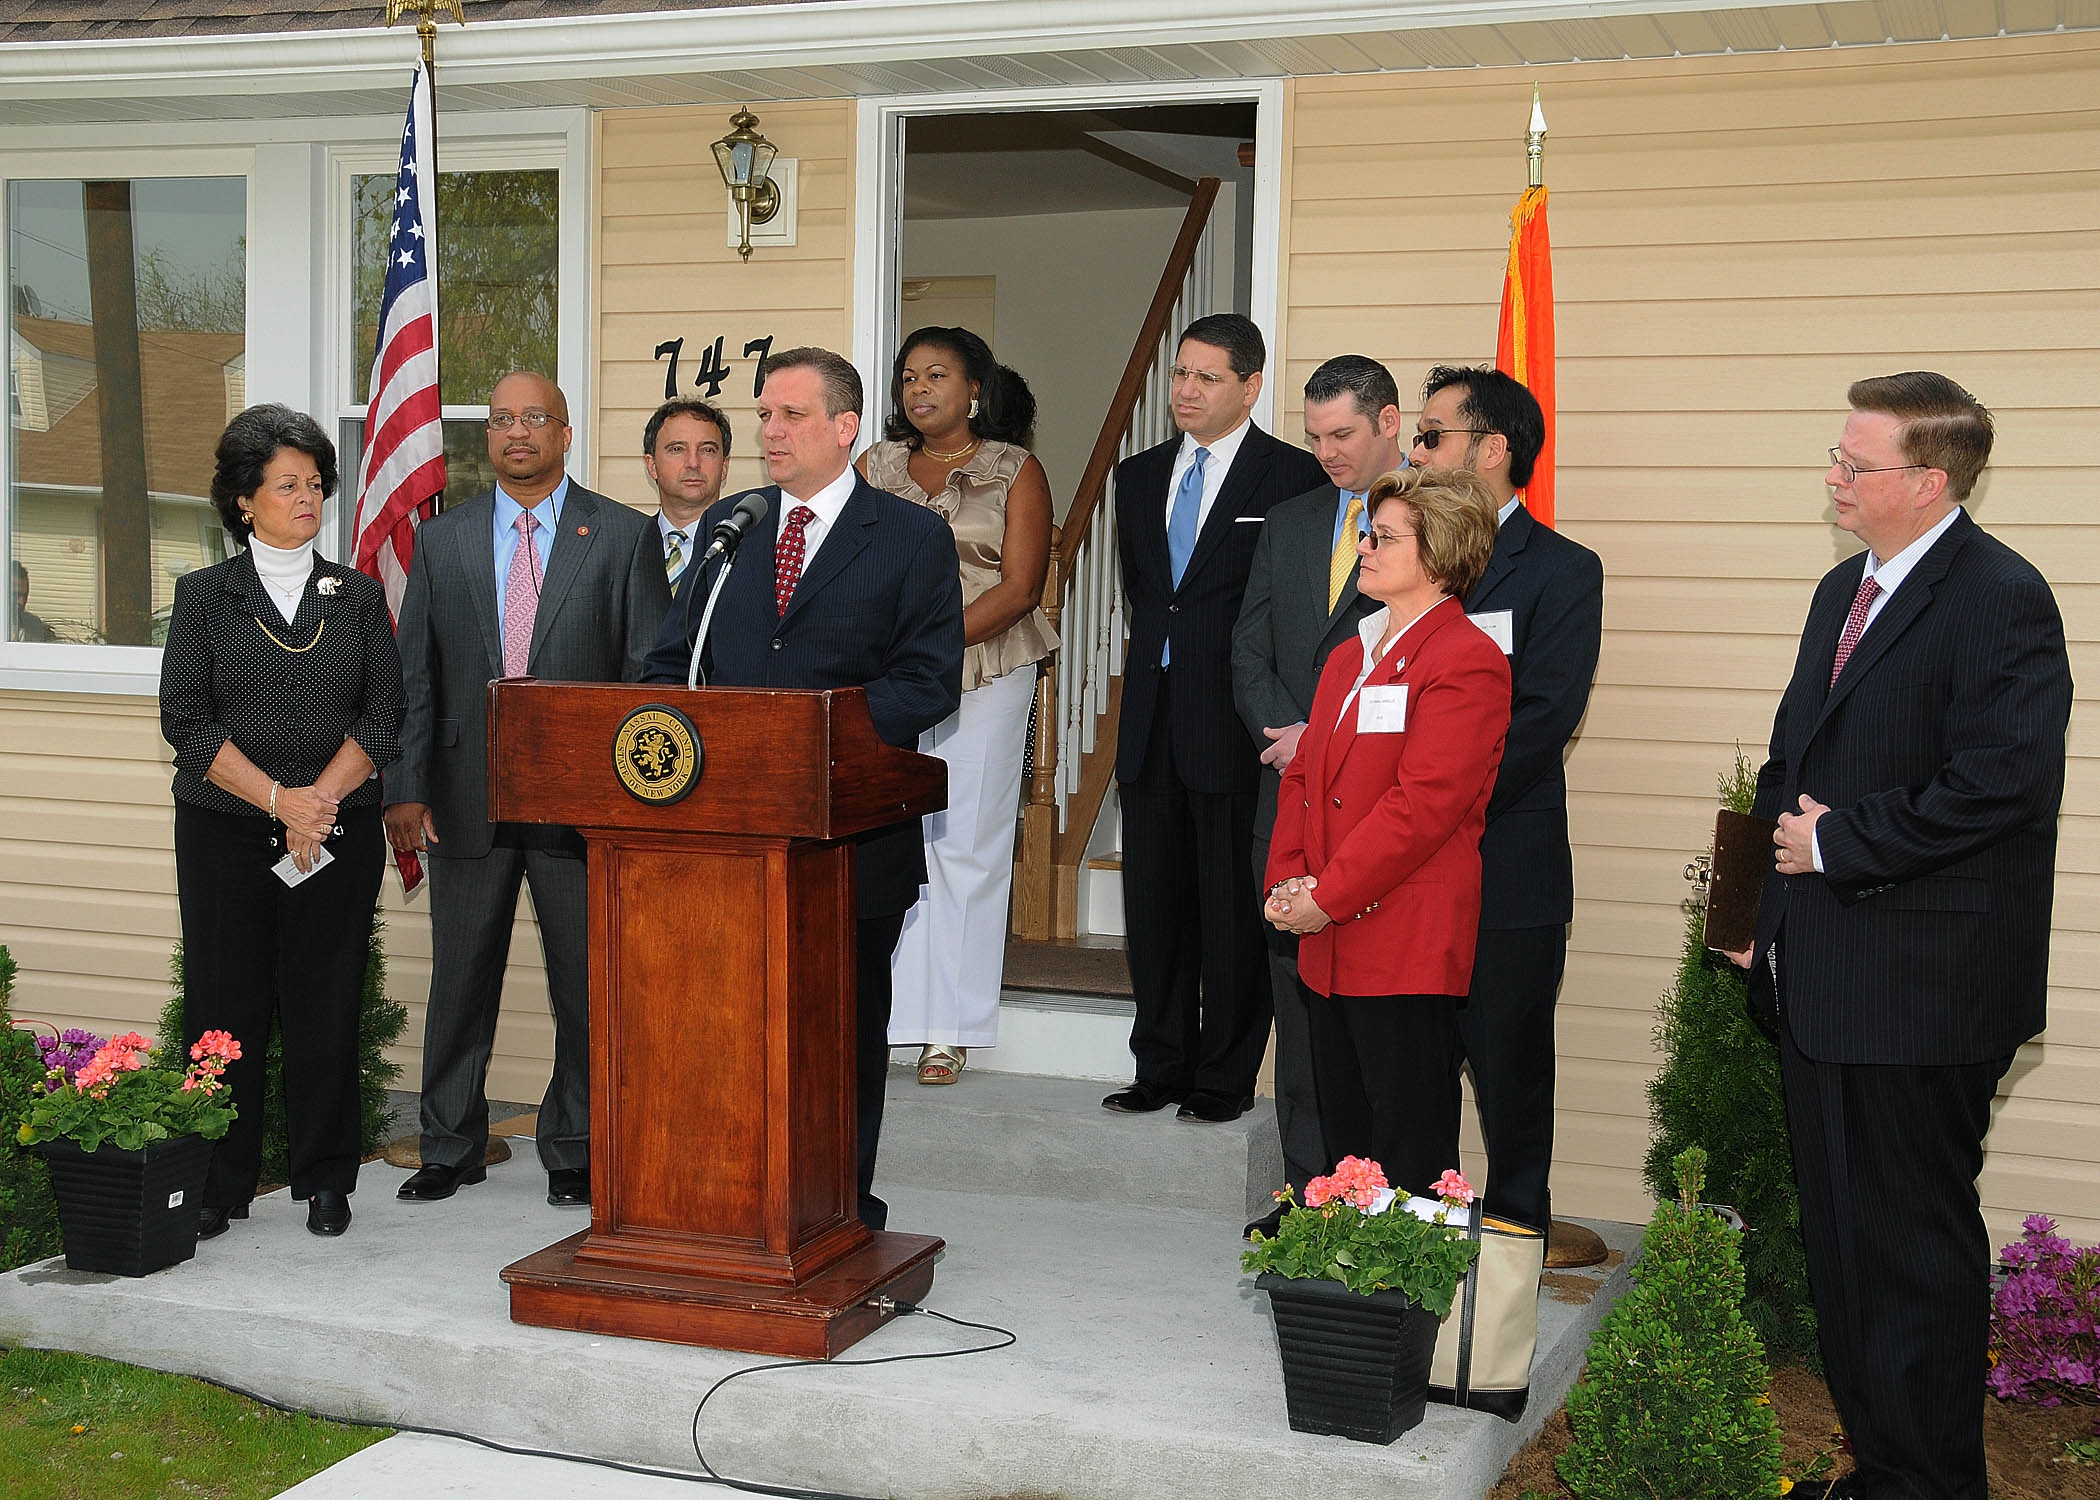 Ed Mangano announces Success of the neighnorhood stabilization program